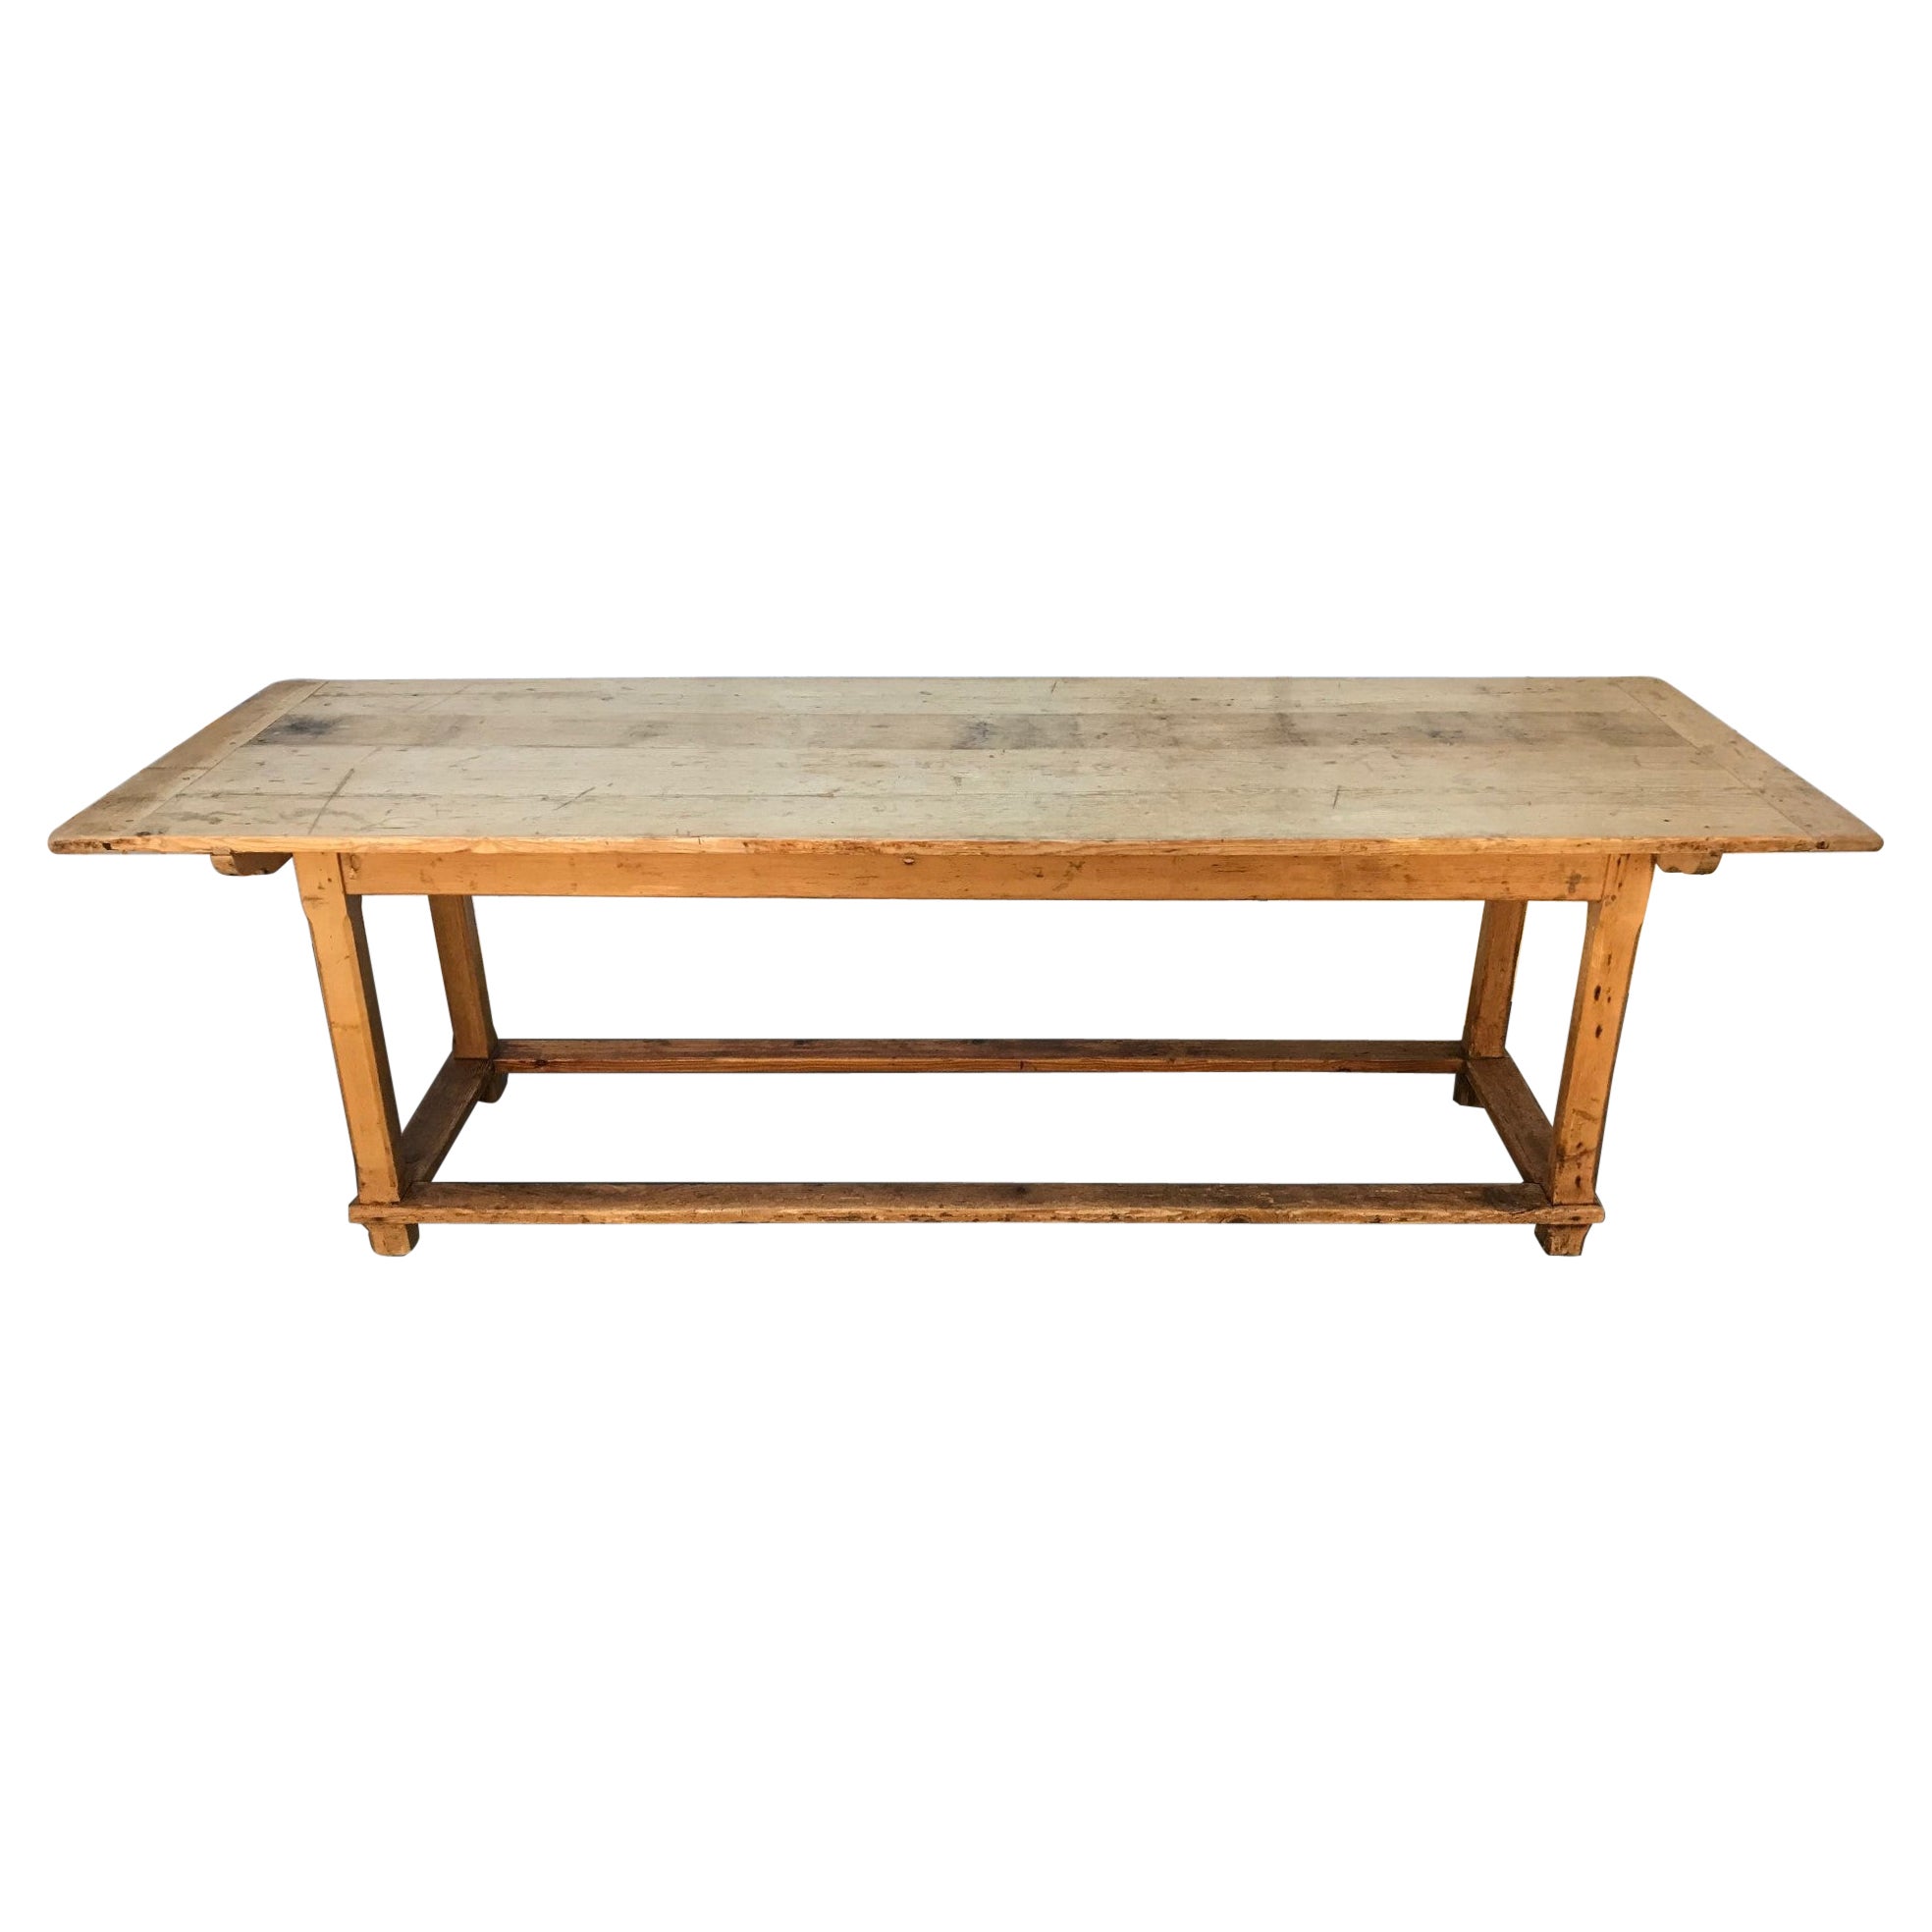 Rare 19th Century English Pine Farm Table